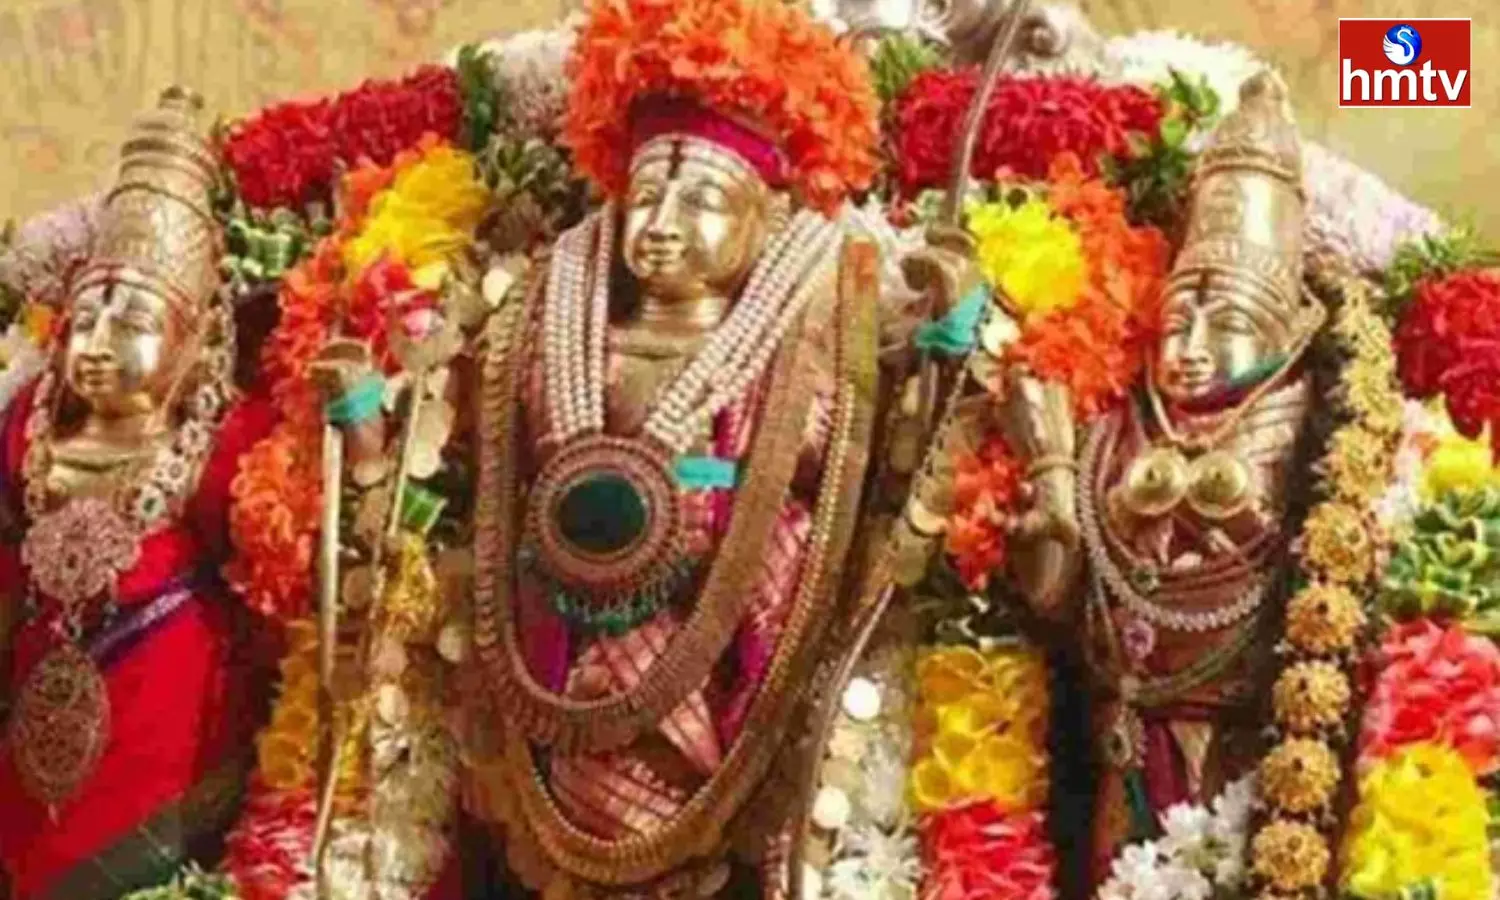 Devotees flock to temples during Sri Ram Navami celebrations